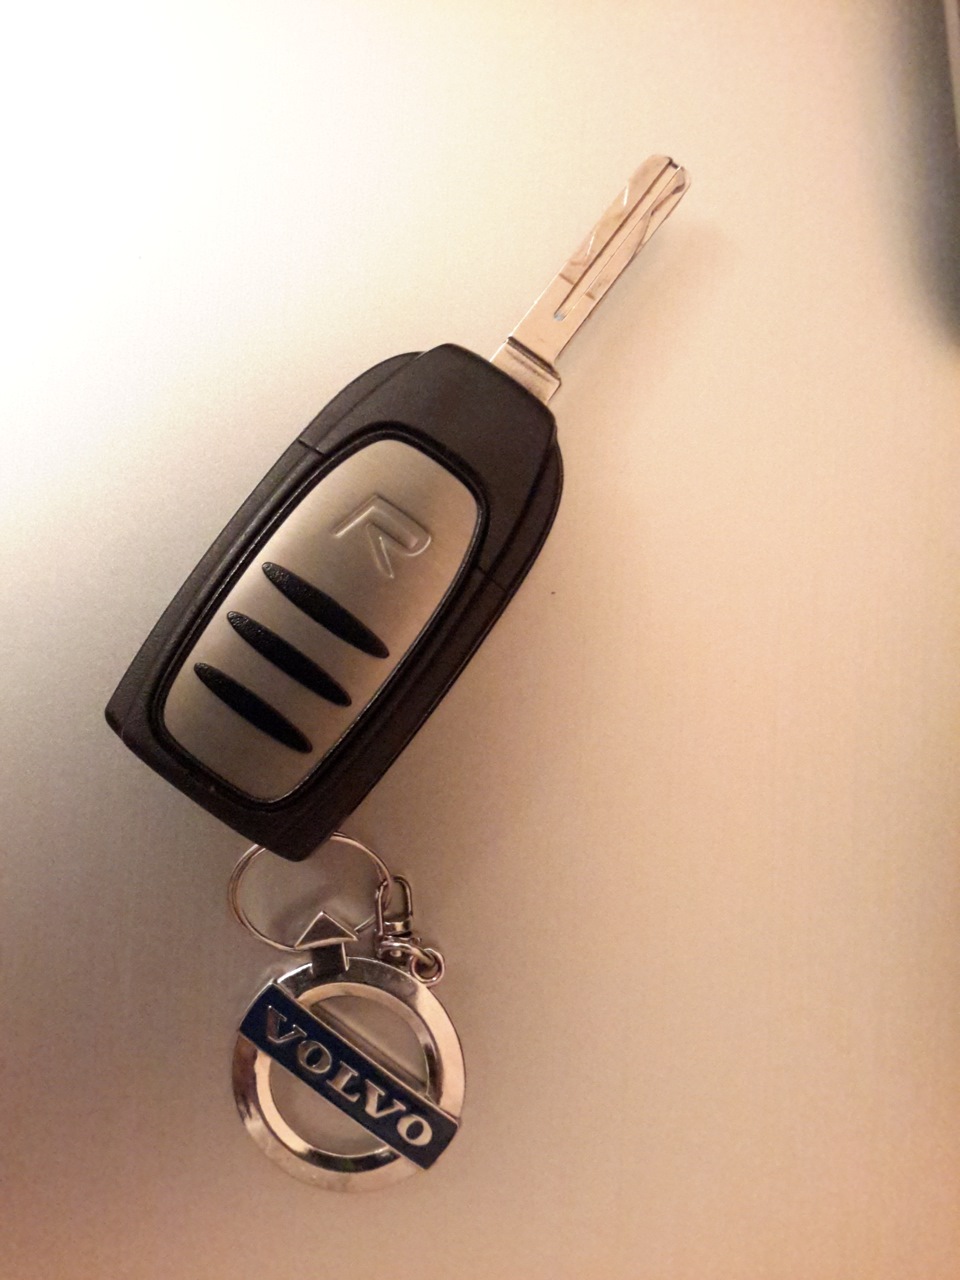 Action ключ. Ключ Вольво s60. Ключи от Volvo s60 2021. Вольво с 60 ключ зажигания новый. Ключ зажигания Вольво s60.